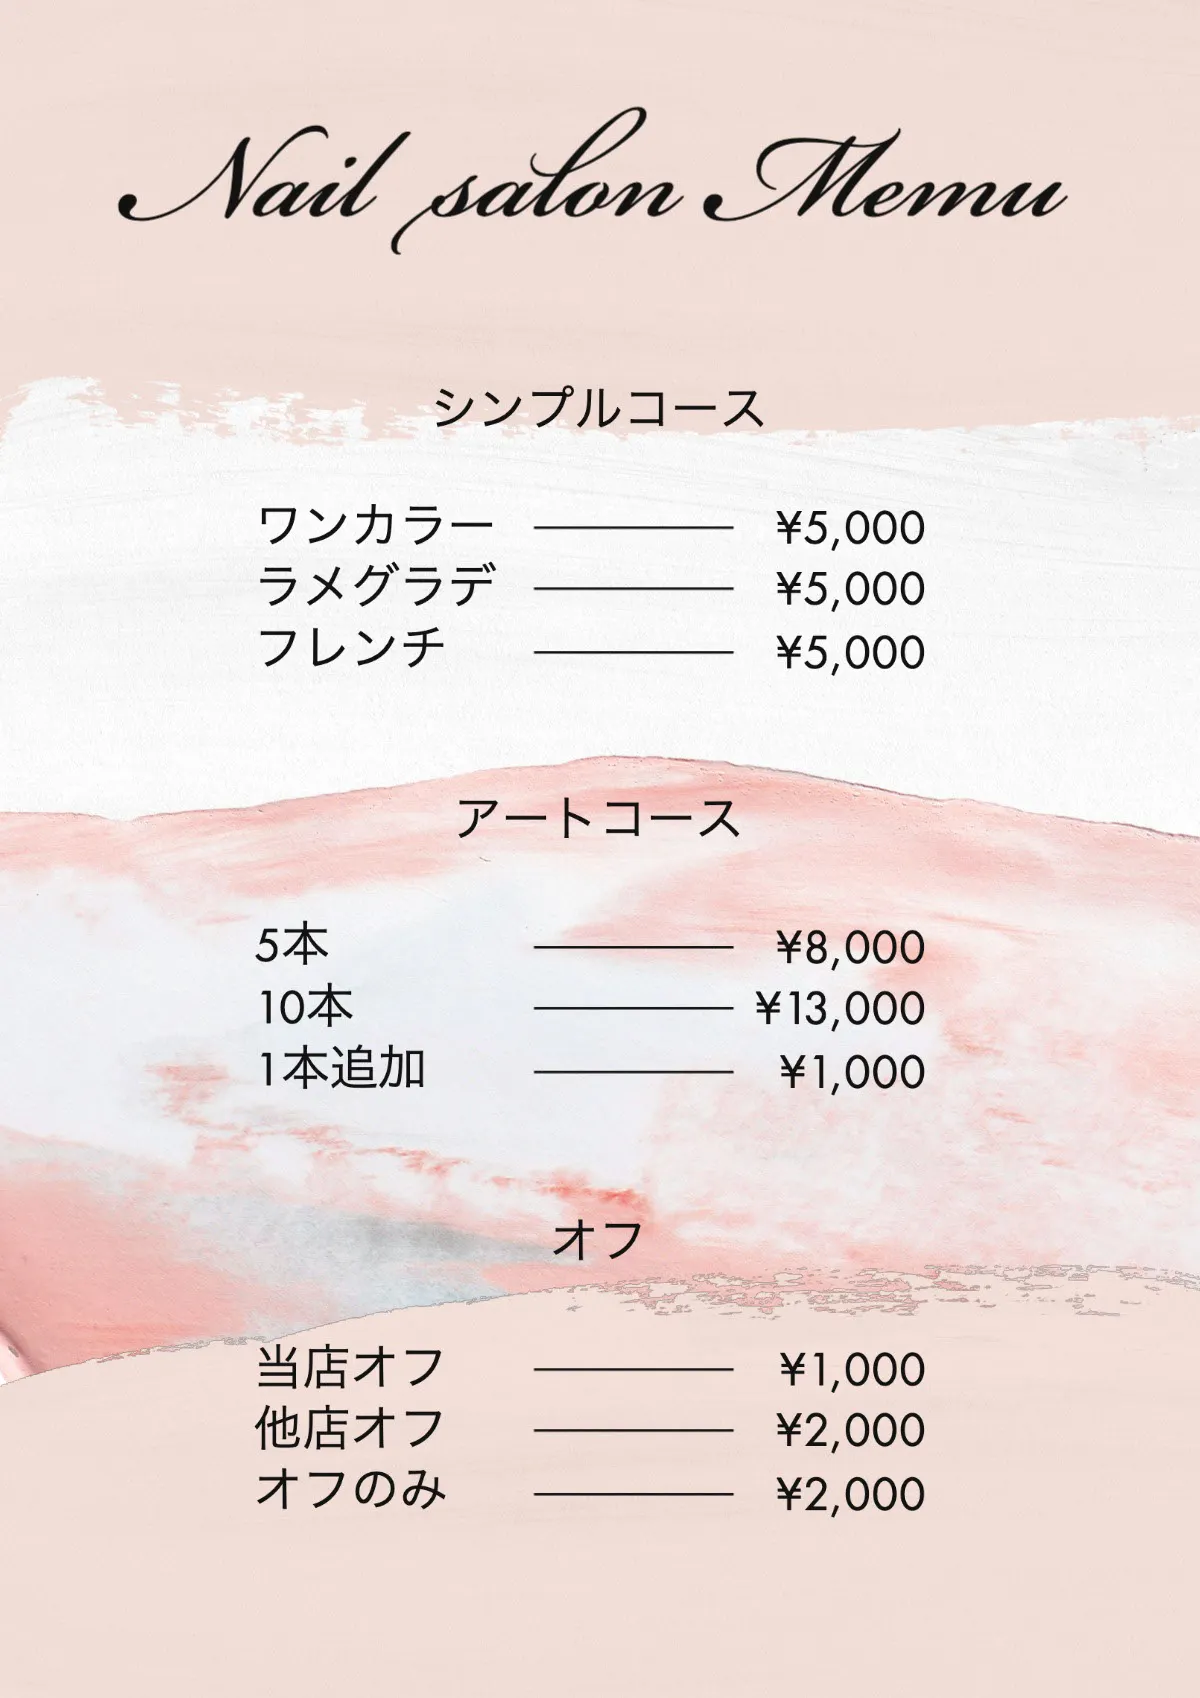 Pink nail salon menu